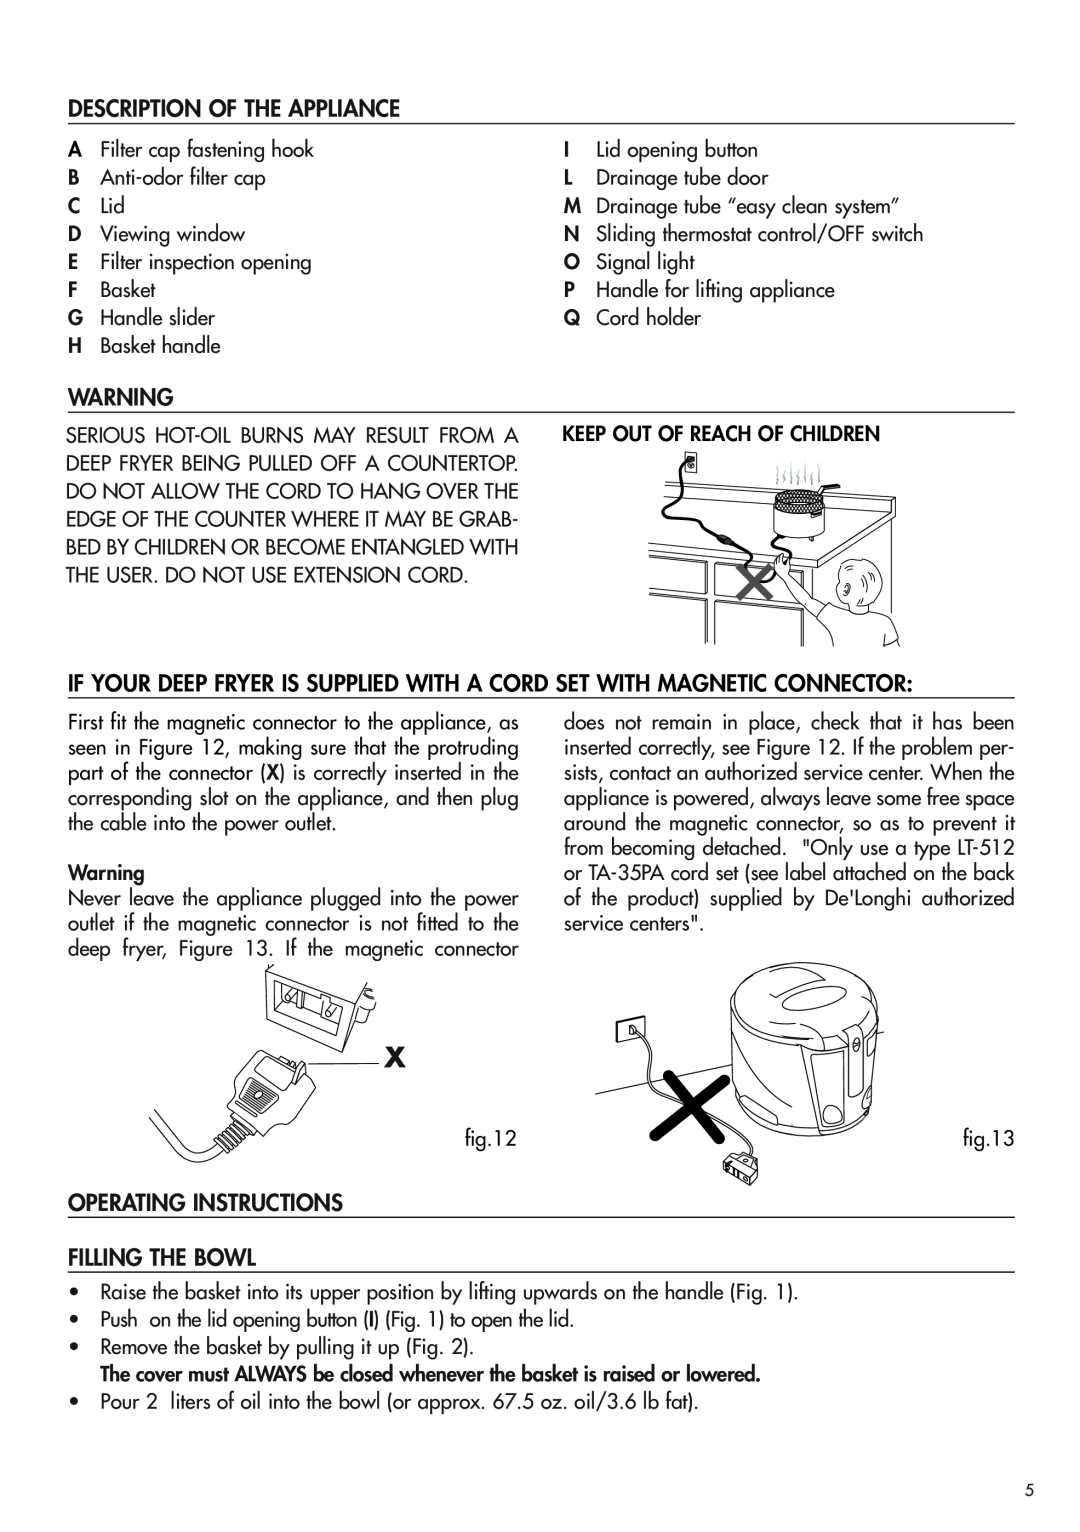 DeLonghi D677UX manual Description Of The Appliance, Operating Instructions Filling The Bowl 